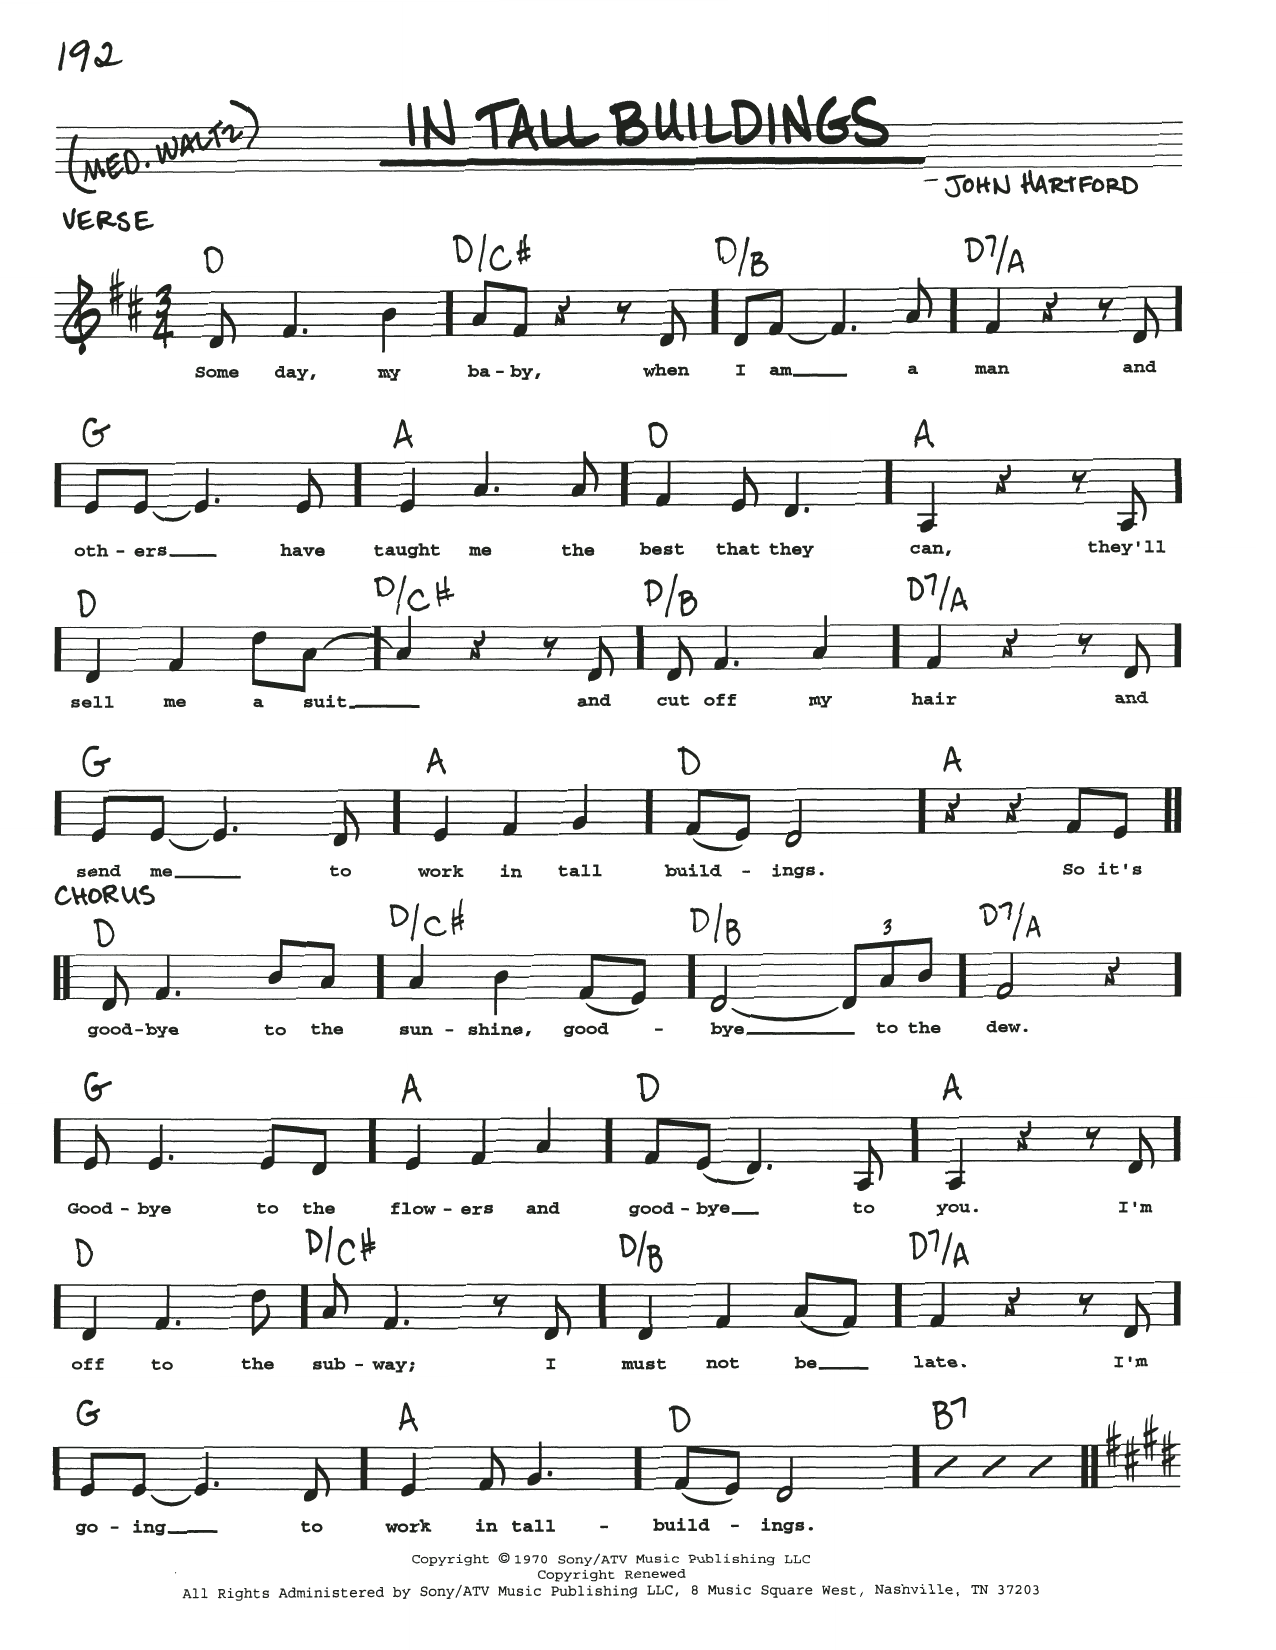 John Hartford In Tall Buildings Sheet Music Notes & Chords for Real Book – Melody, Lyrics & Chords - Download or Print PDF